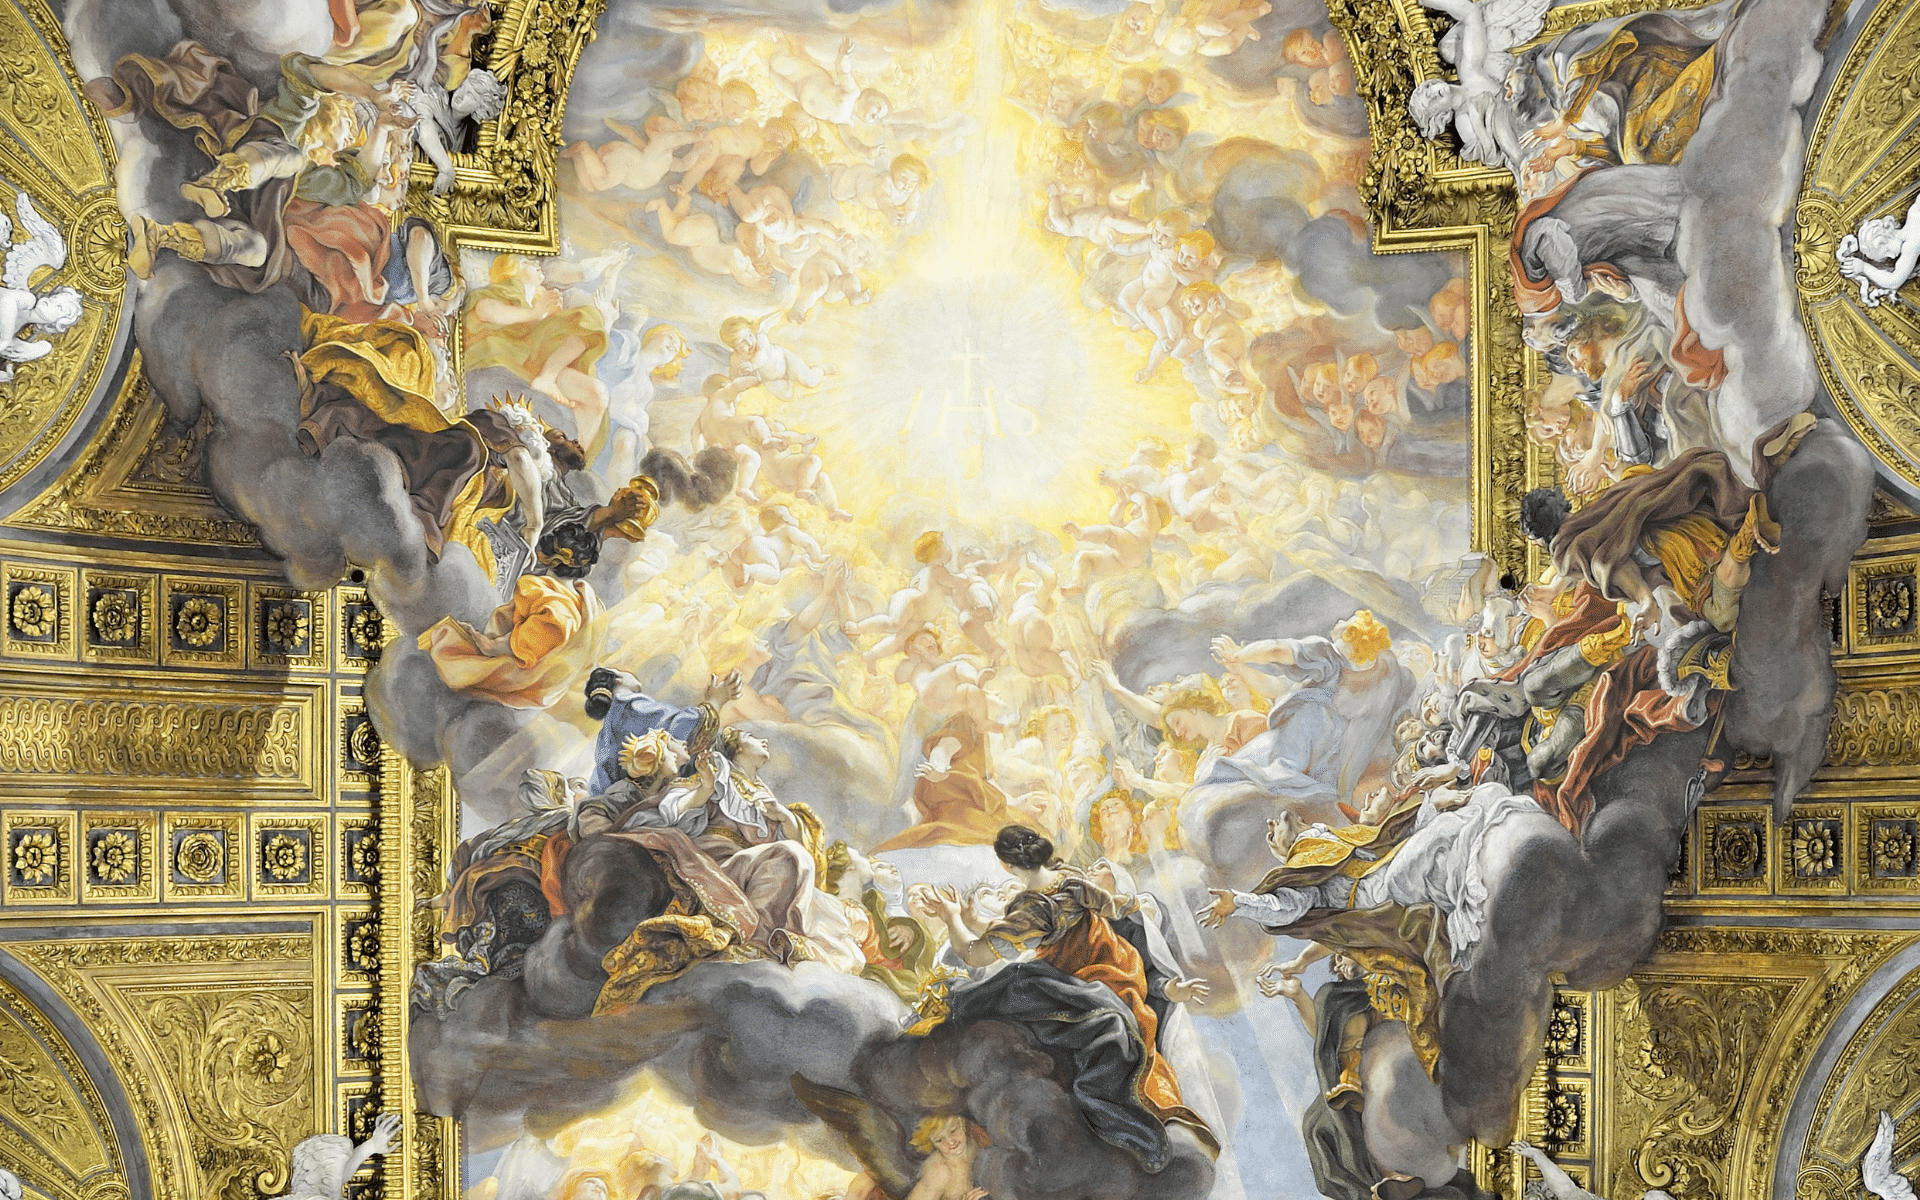 Das Deckenfresko in Il Gesù von G. Battista Gaulli im Langhaus | CC BY-SA 4.0 (https://creativecommons.org/licenses/by-sa/4.0), via Wikimedia Commons